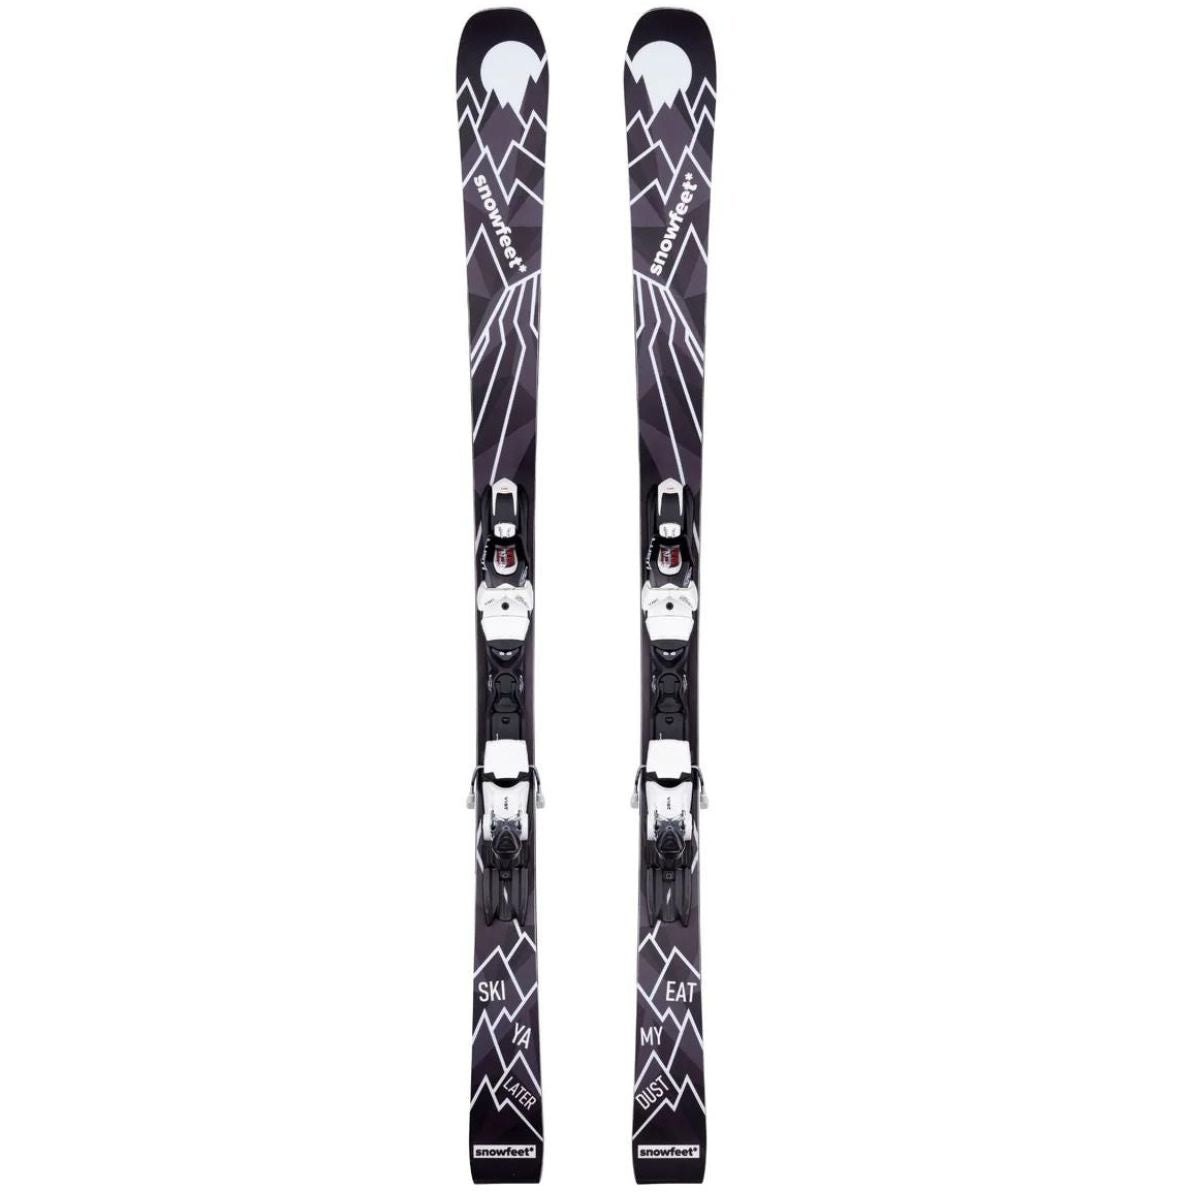 Snowfeet Skis 156 cm | Limited Edition